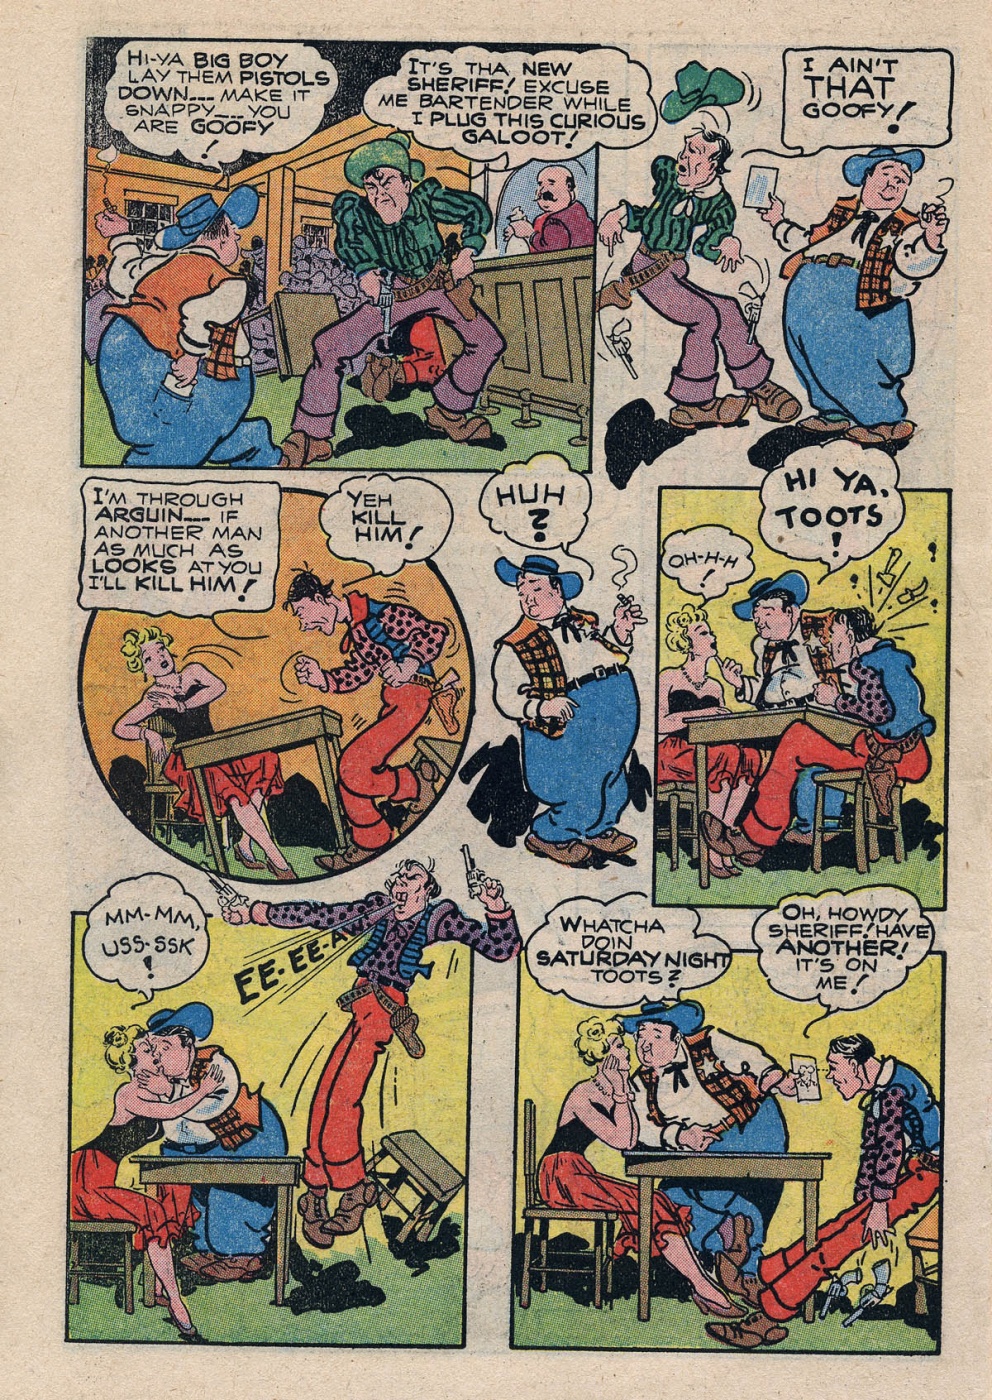 Funny Comic Strips - Abbott and Costello 001 (Feb 1948) 30